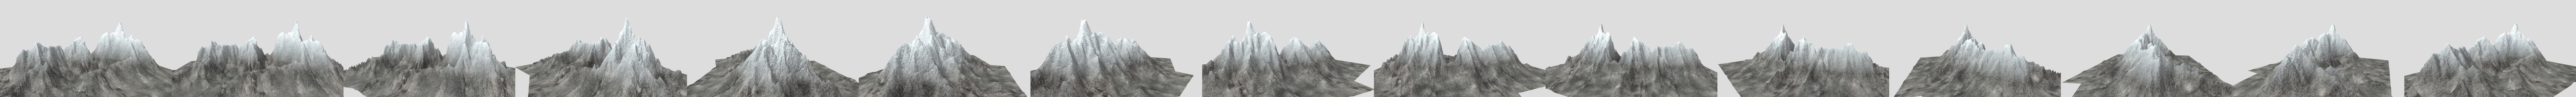 snowy mountain 3d model free download